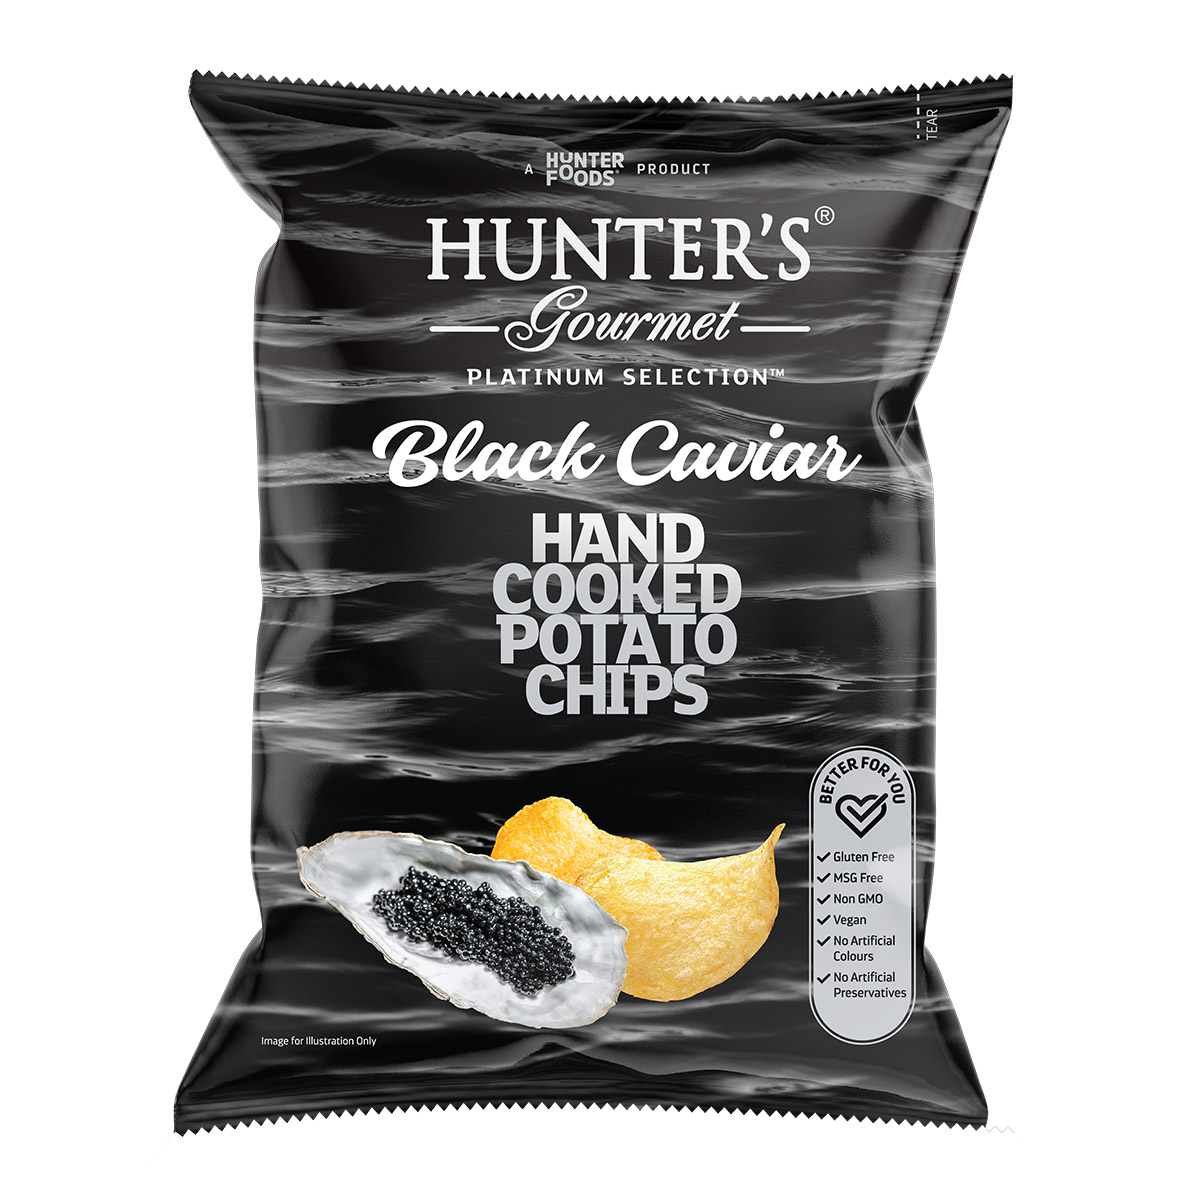 Hunters Gourmet Hand Cooked Potato Chips Black Caviar Platinum